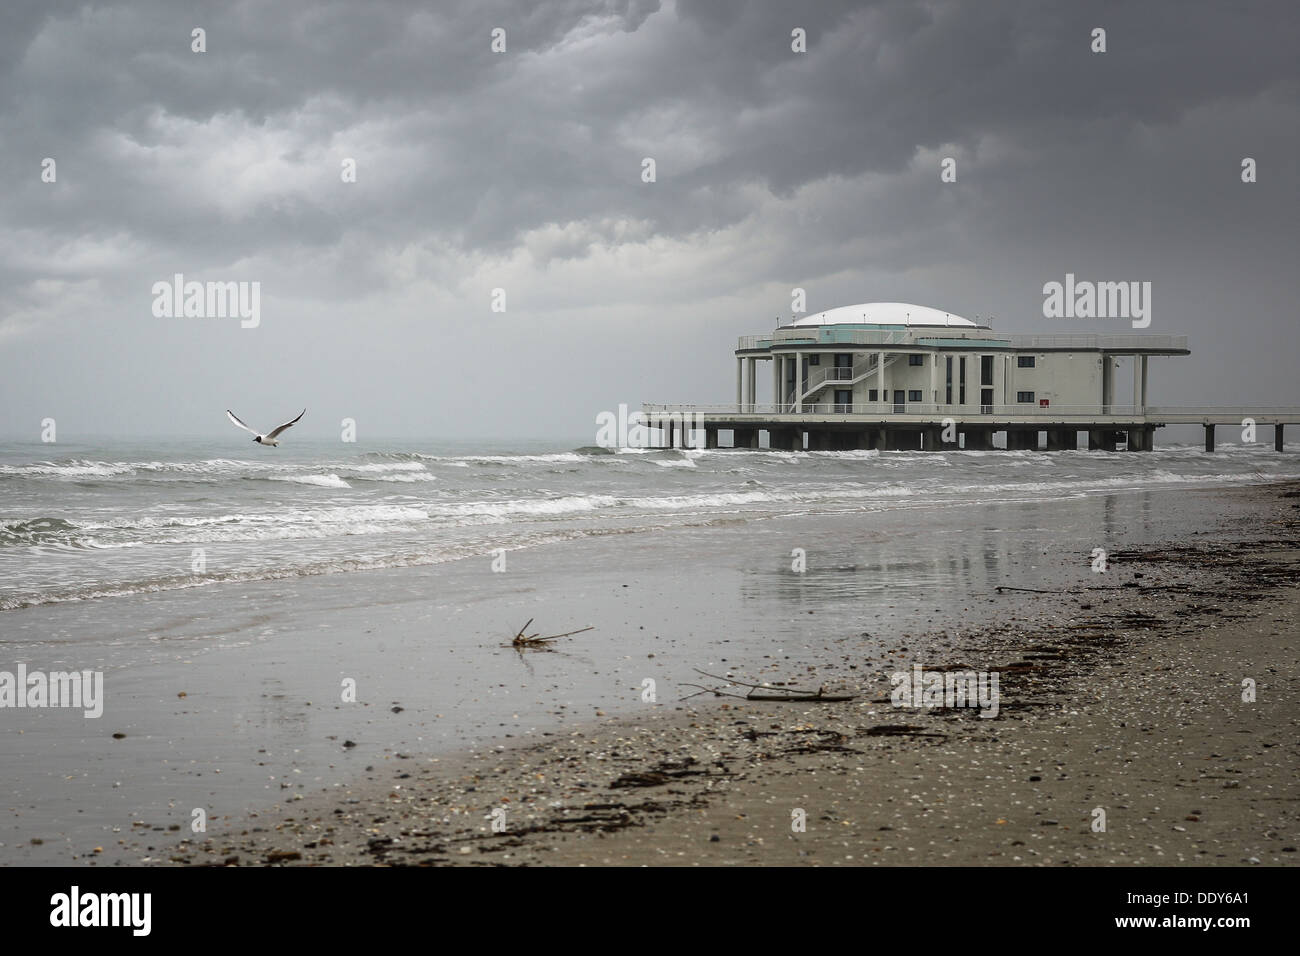 Senigallia (IT) - Invierno Seascape de un muelle durante una tormenta. Foto de stock